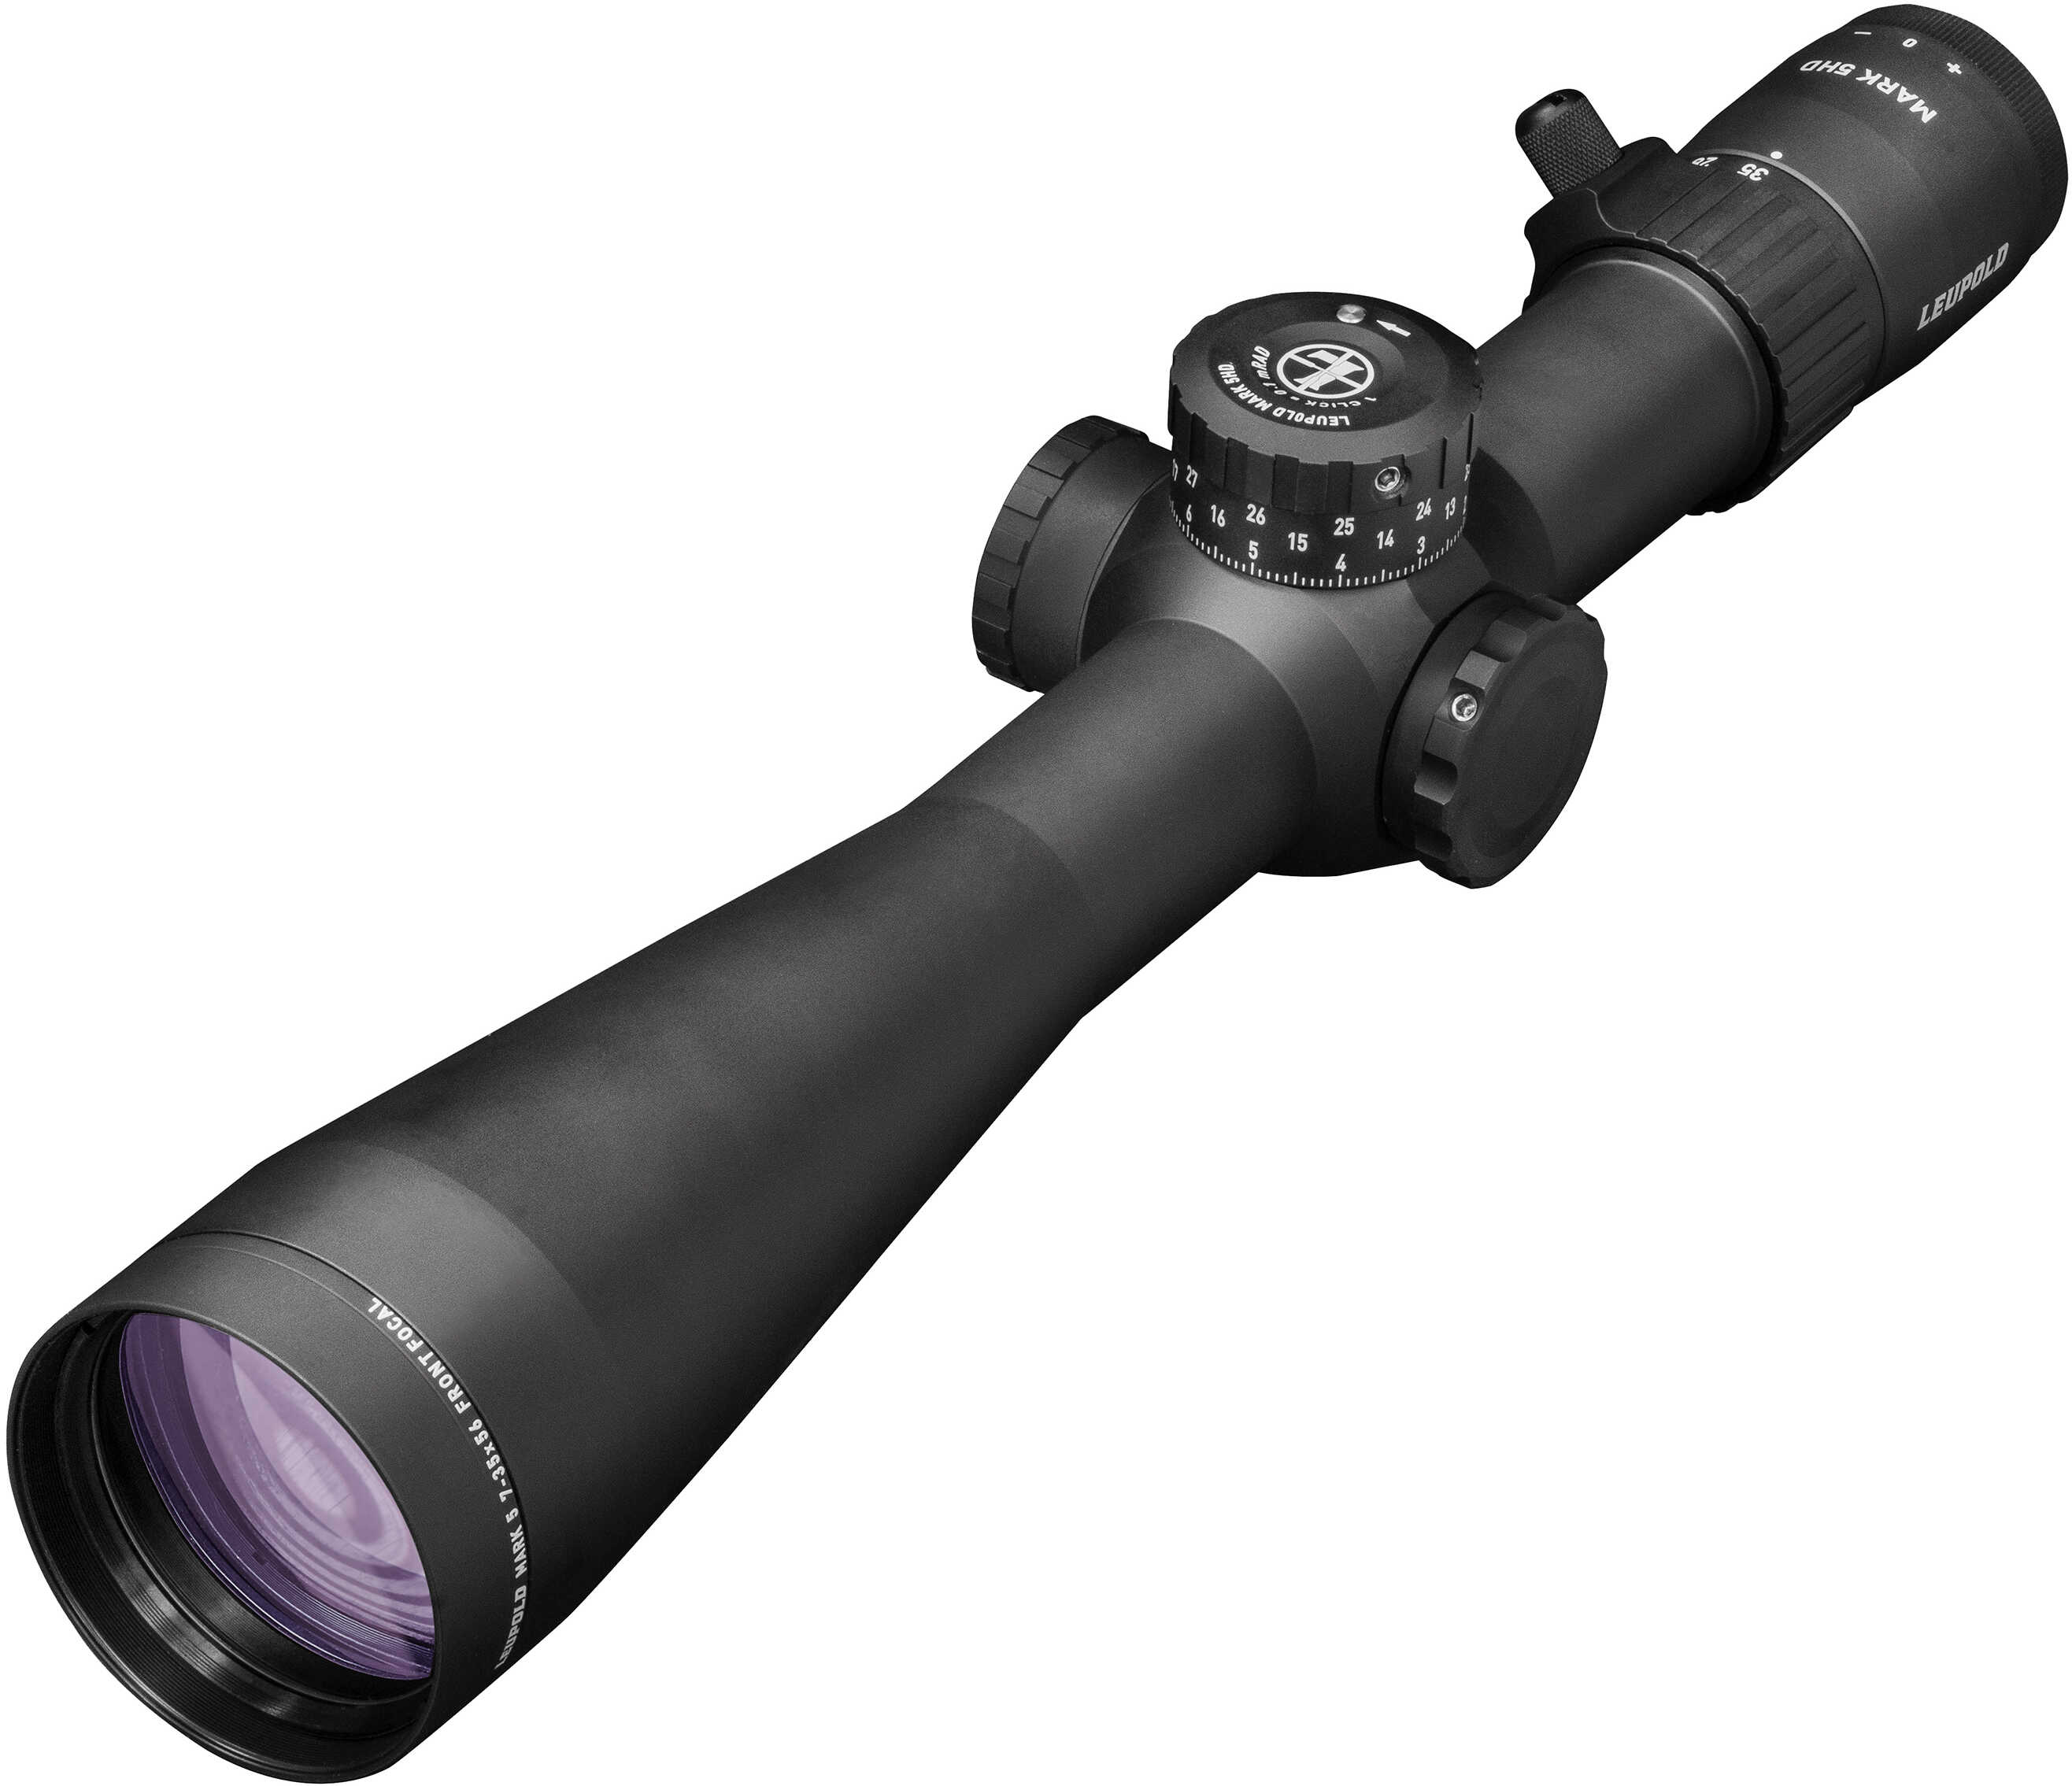 Leupold Mark 5HD Riflescope 7-35x56mm, 35mm Tube, Impact 60 MOA Reticle, Matte Black